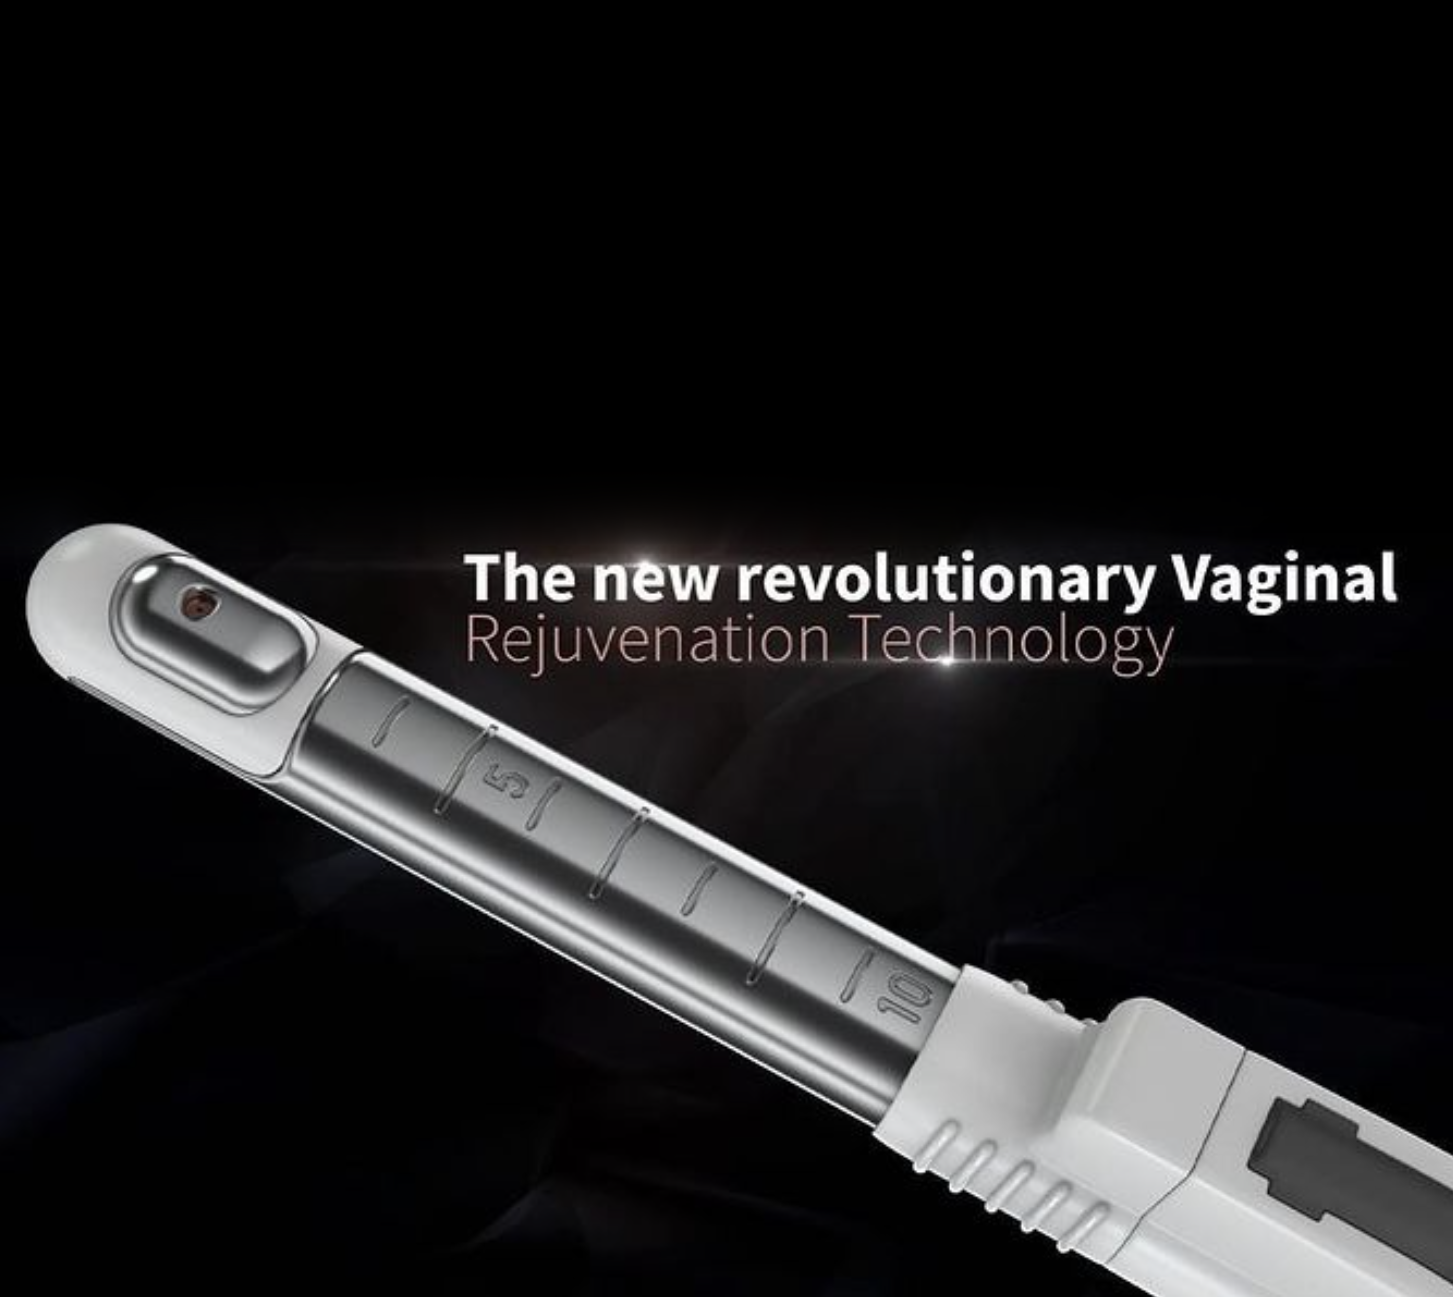 Viora V-VR Vaginal rejuvenation Technology